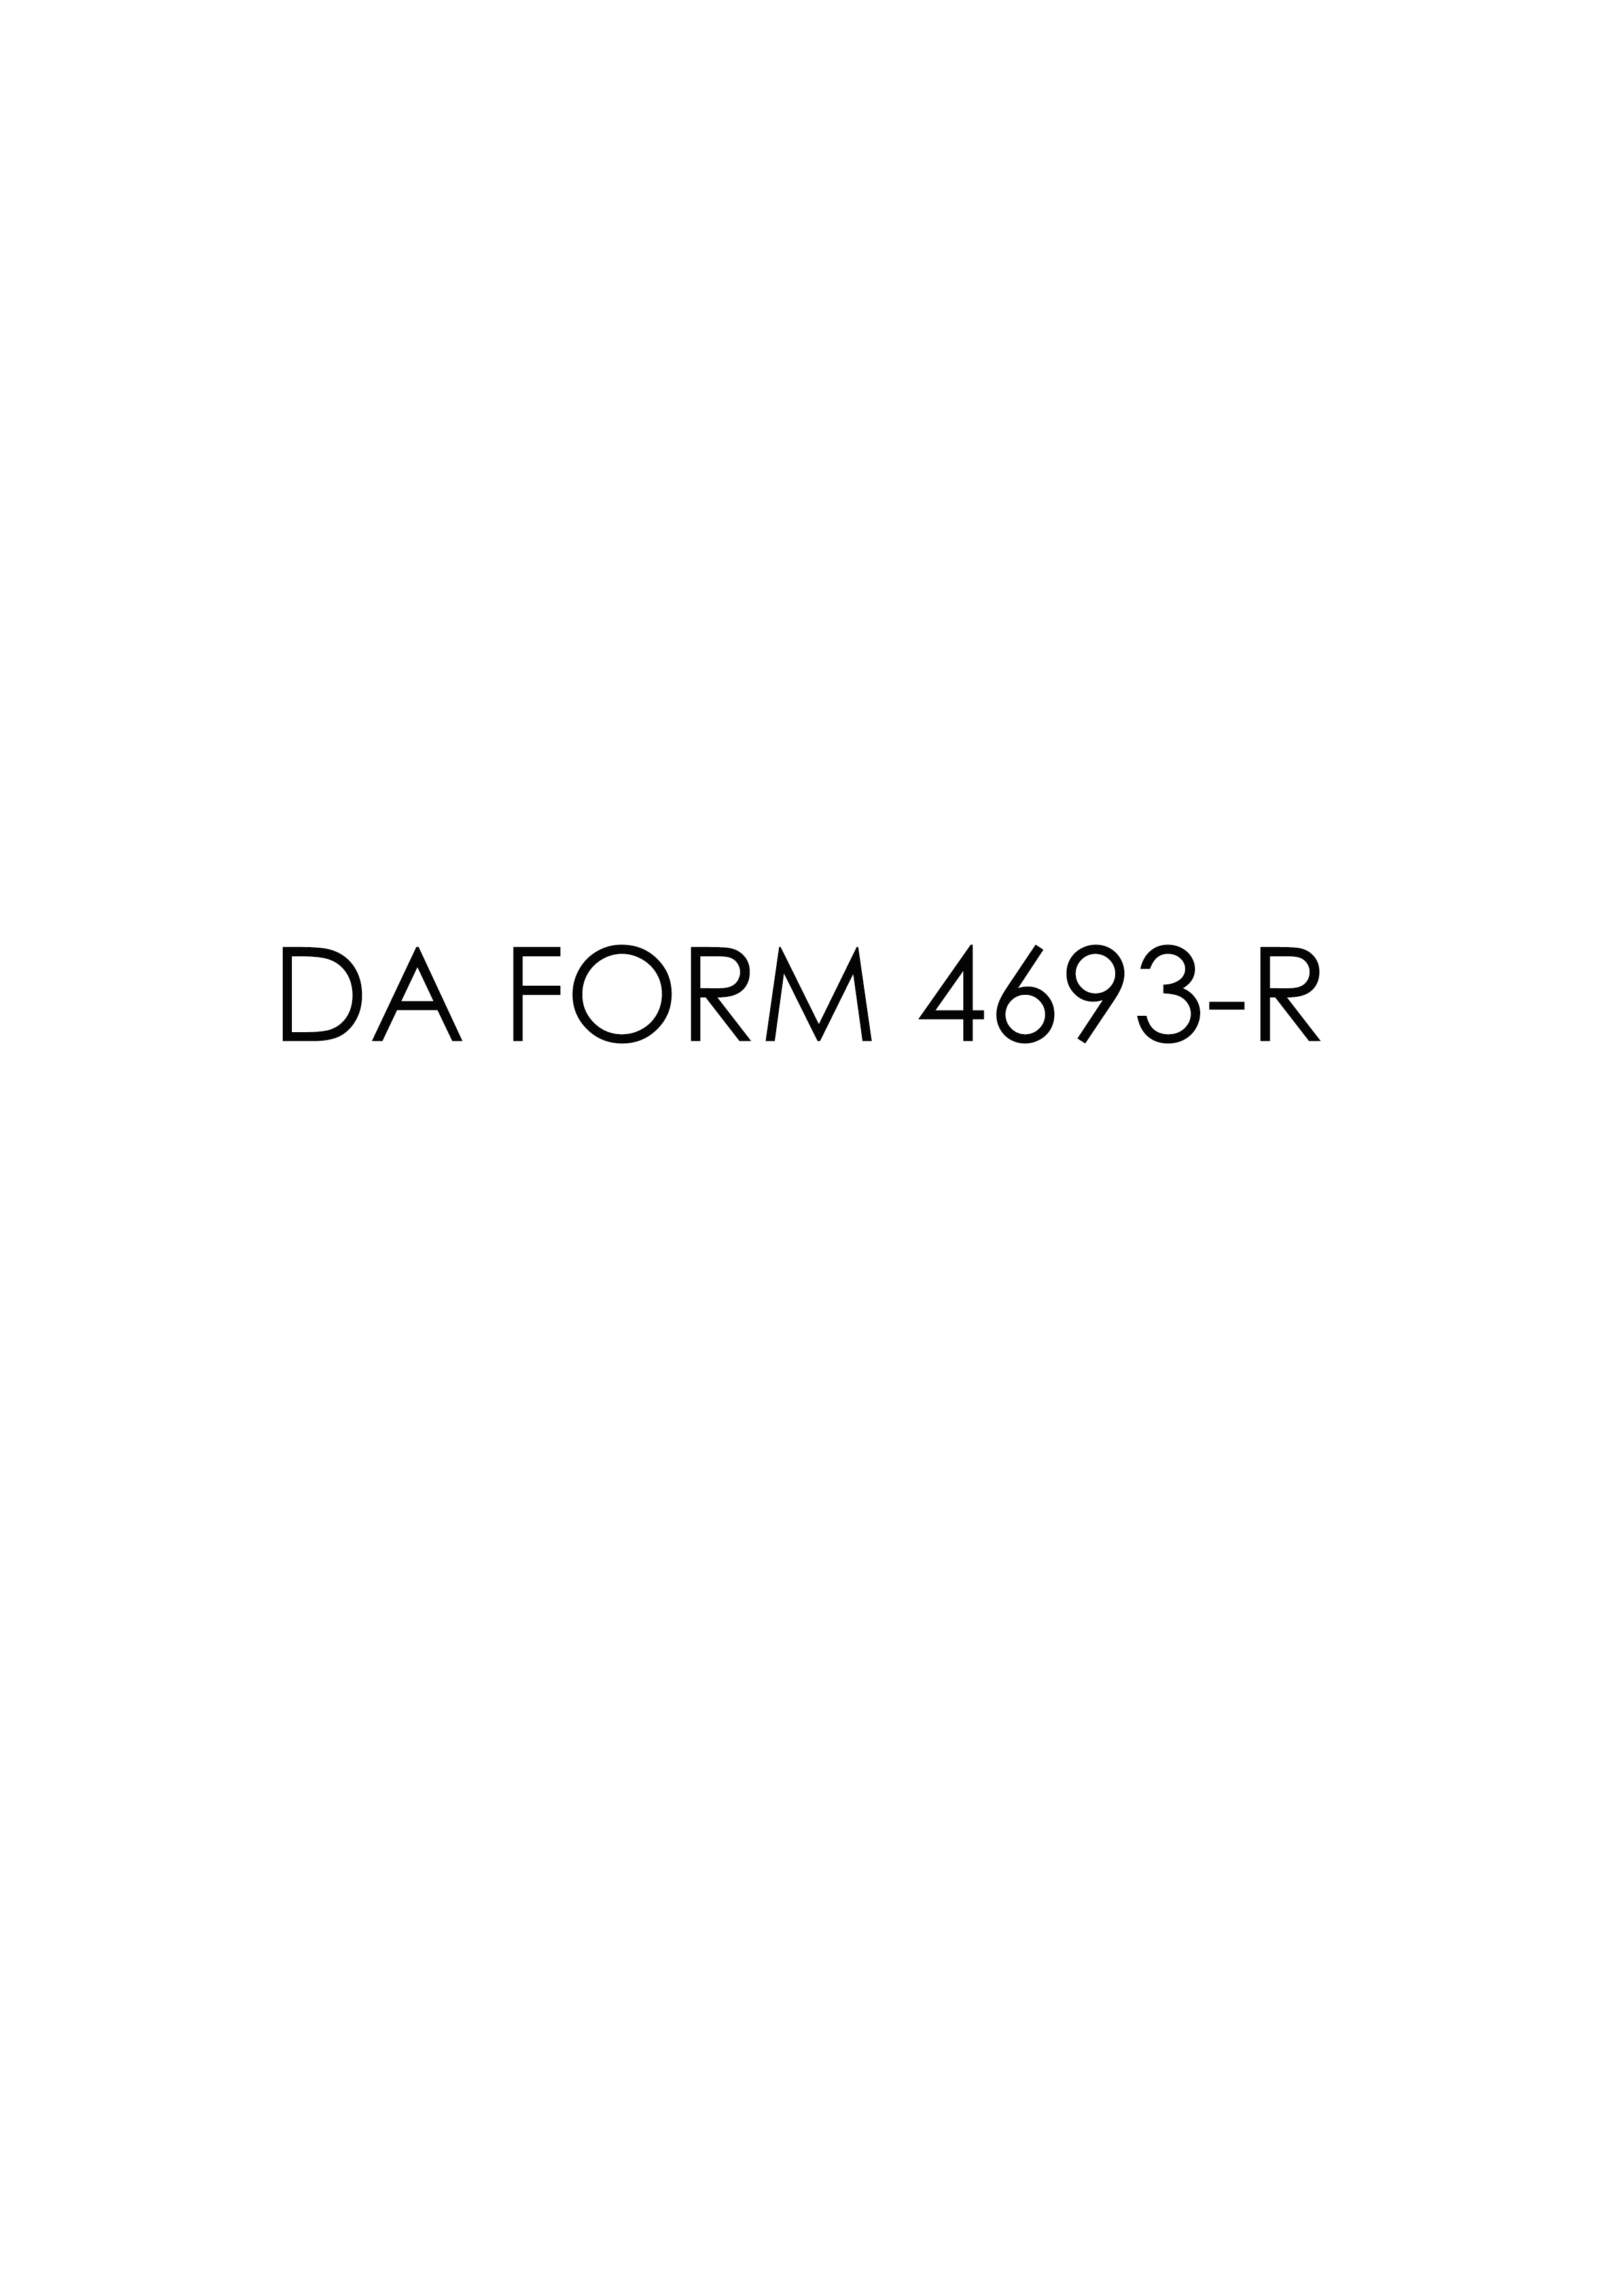 da Form 4693-R fillable